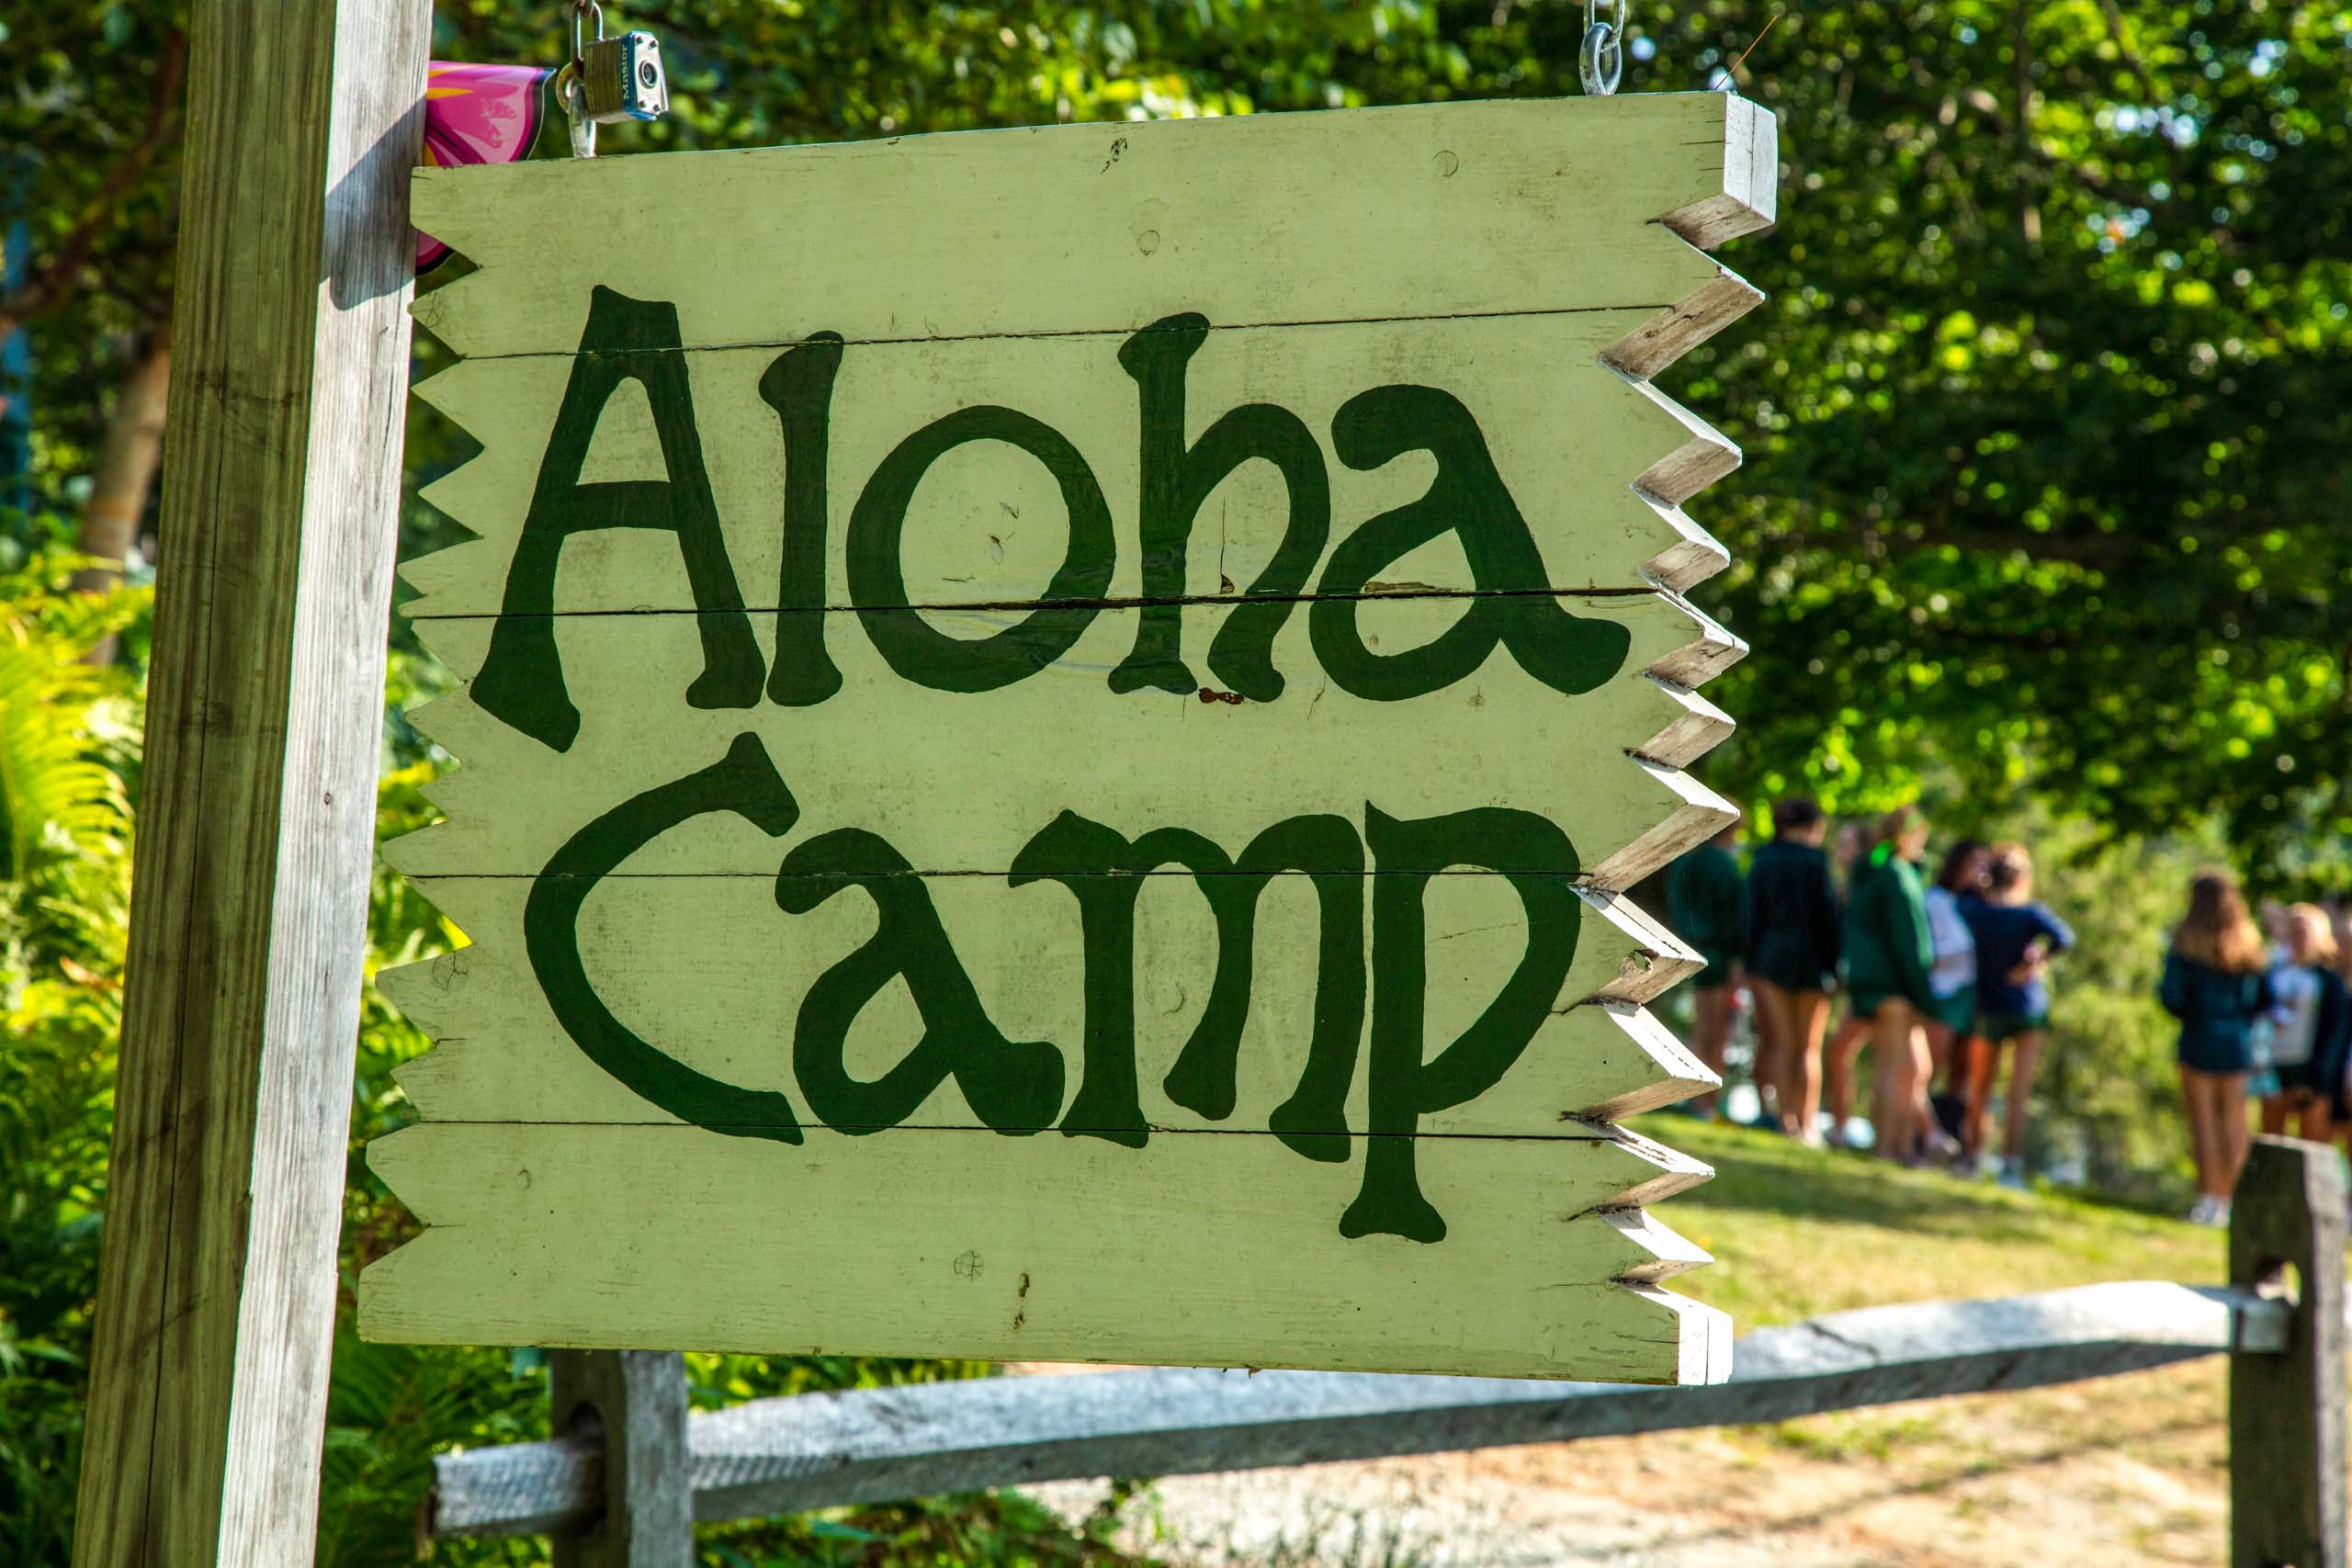 Camp sign saying "Aloha Camp."